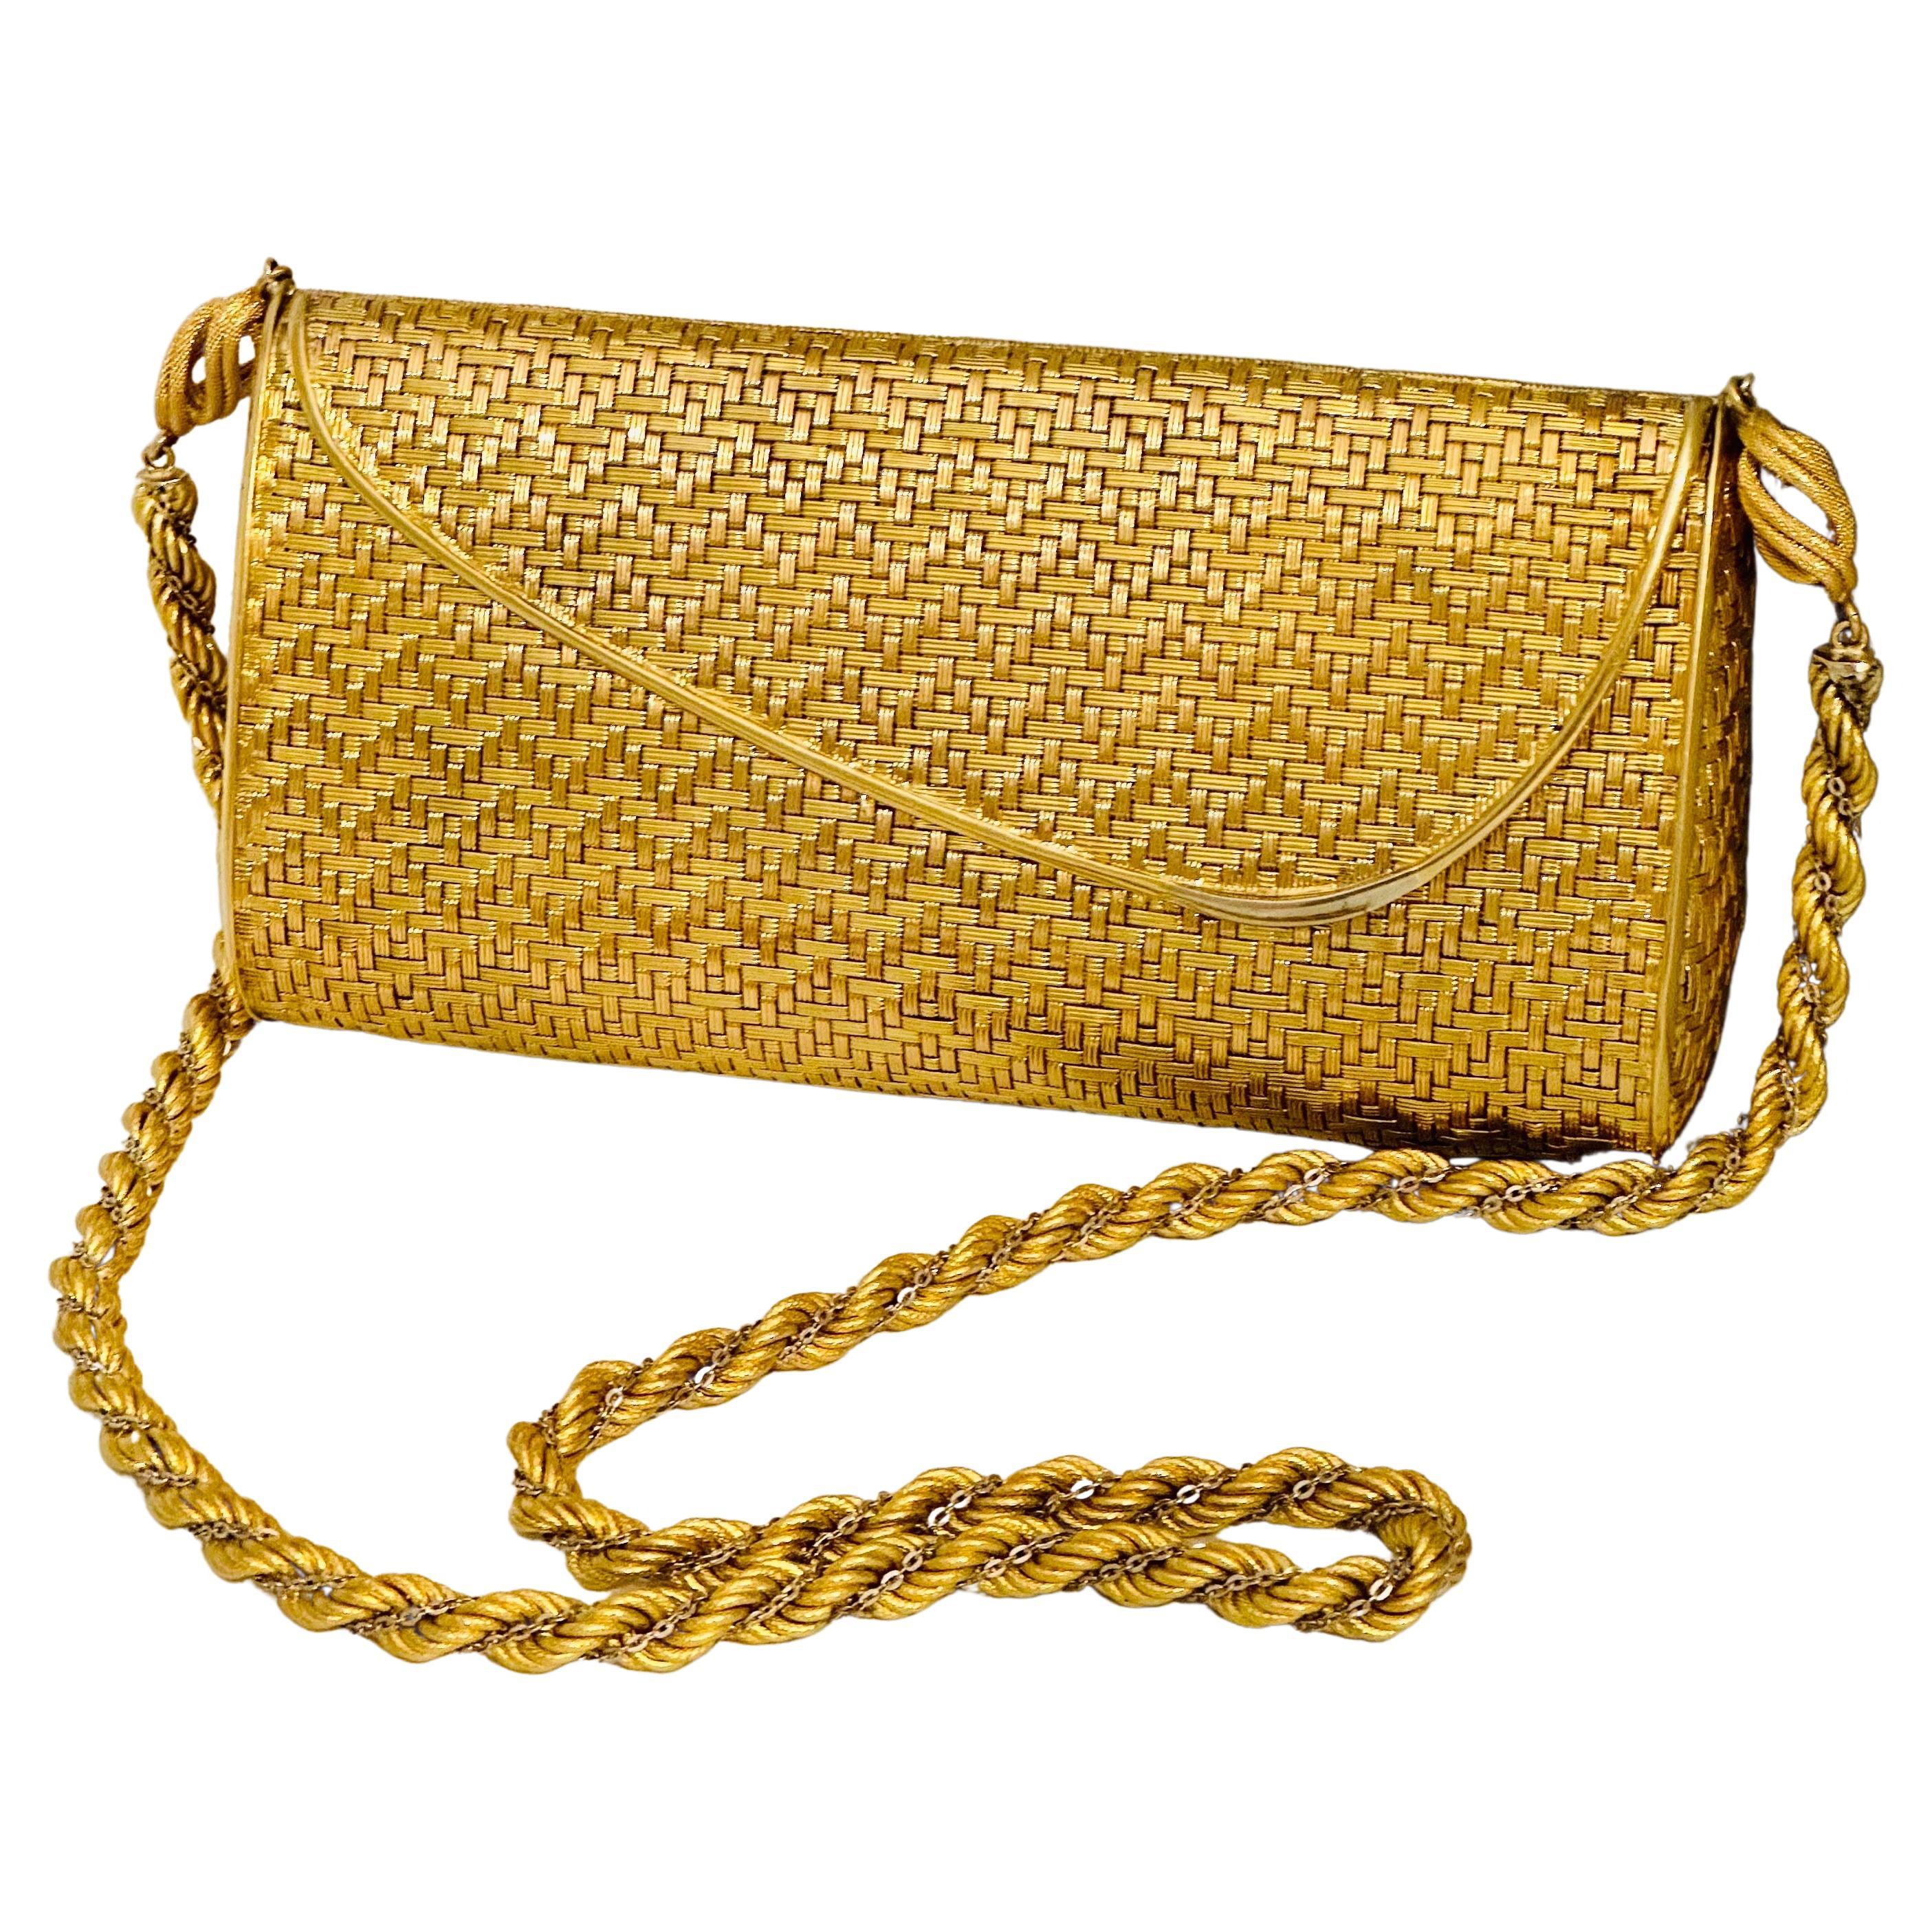 Cartier 18k Yellow Gold Mesh Purse Handbag with Shoulder Chain Rare 401 Gm